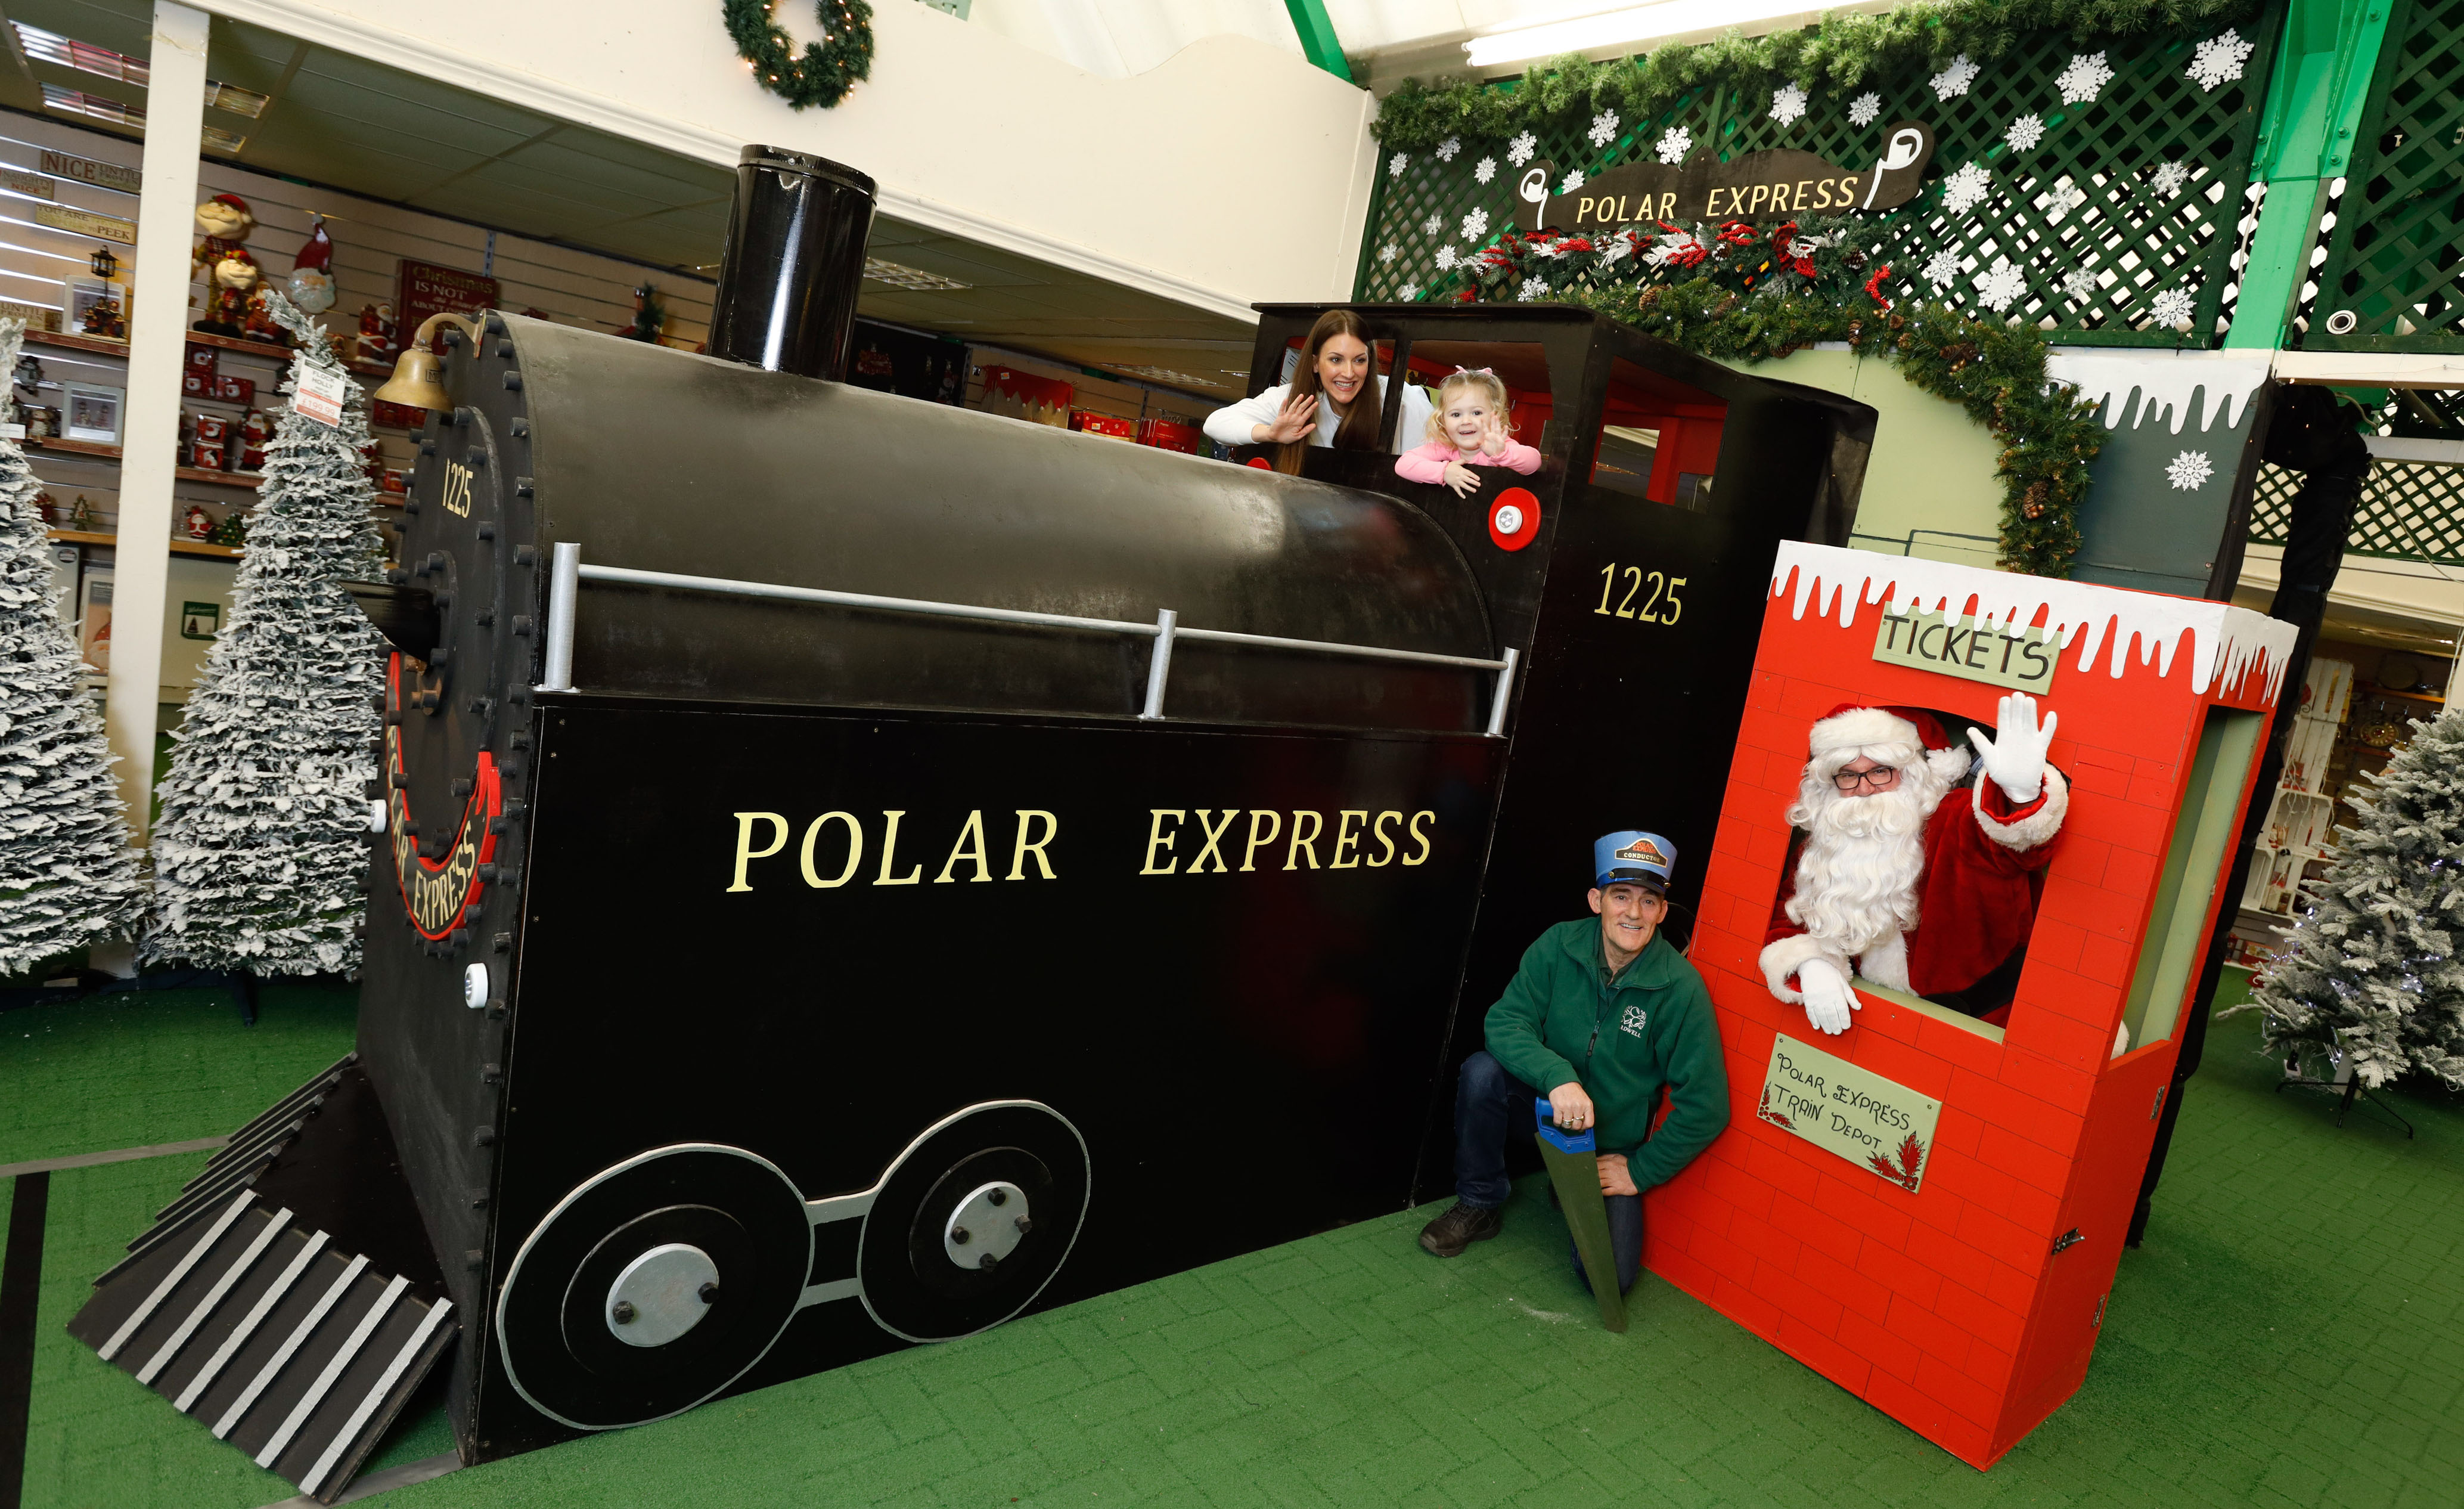 The real-life Polar Express created by a local handyman. (Mark F. Gibson)